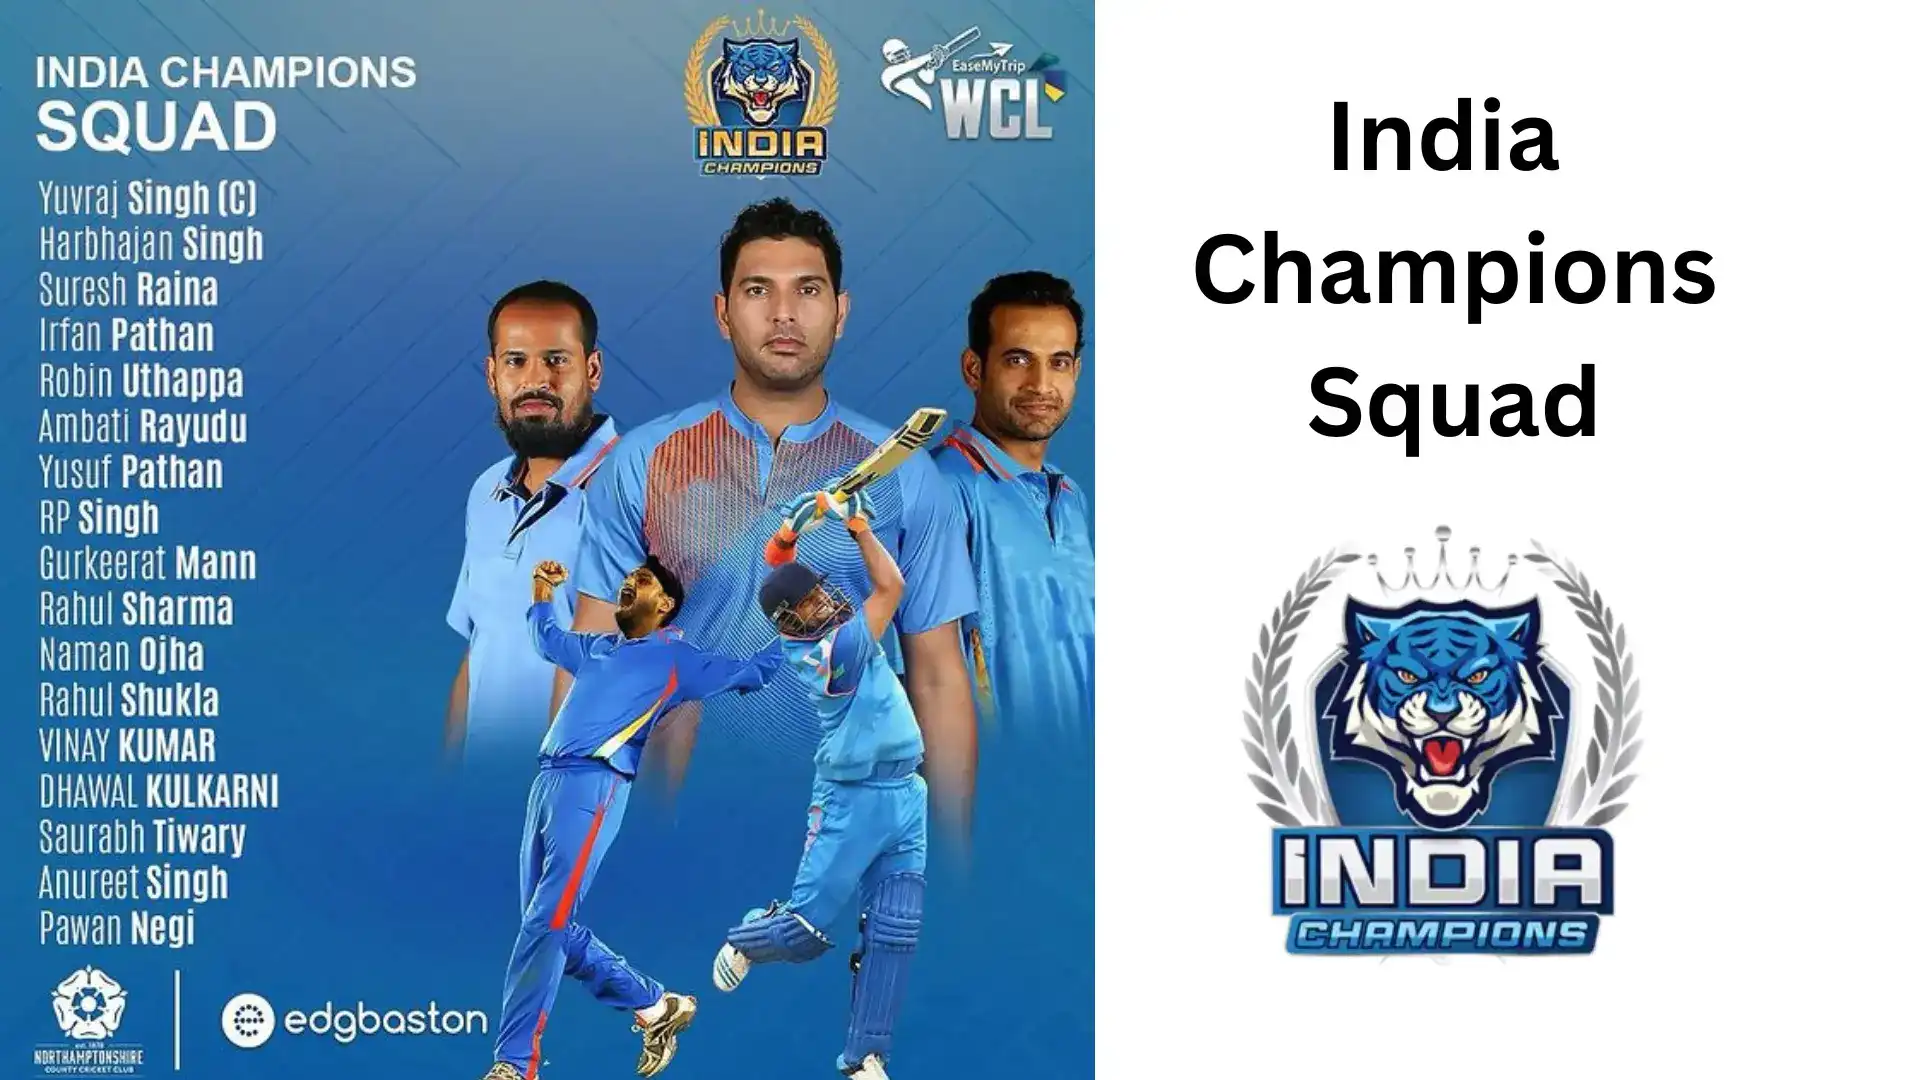 India Champions Squad Banner